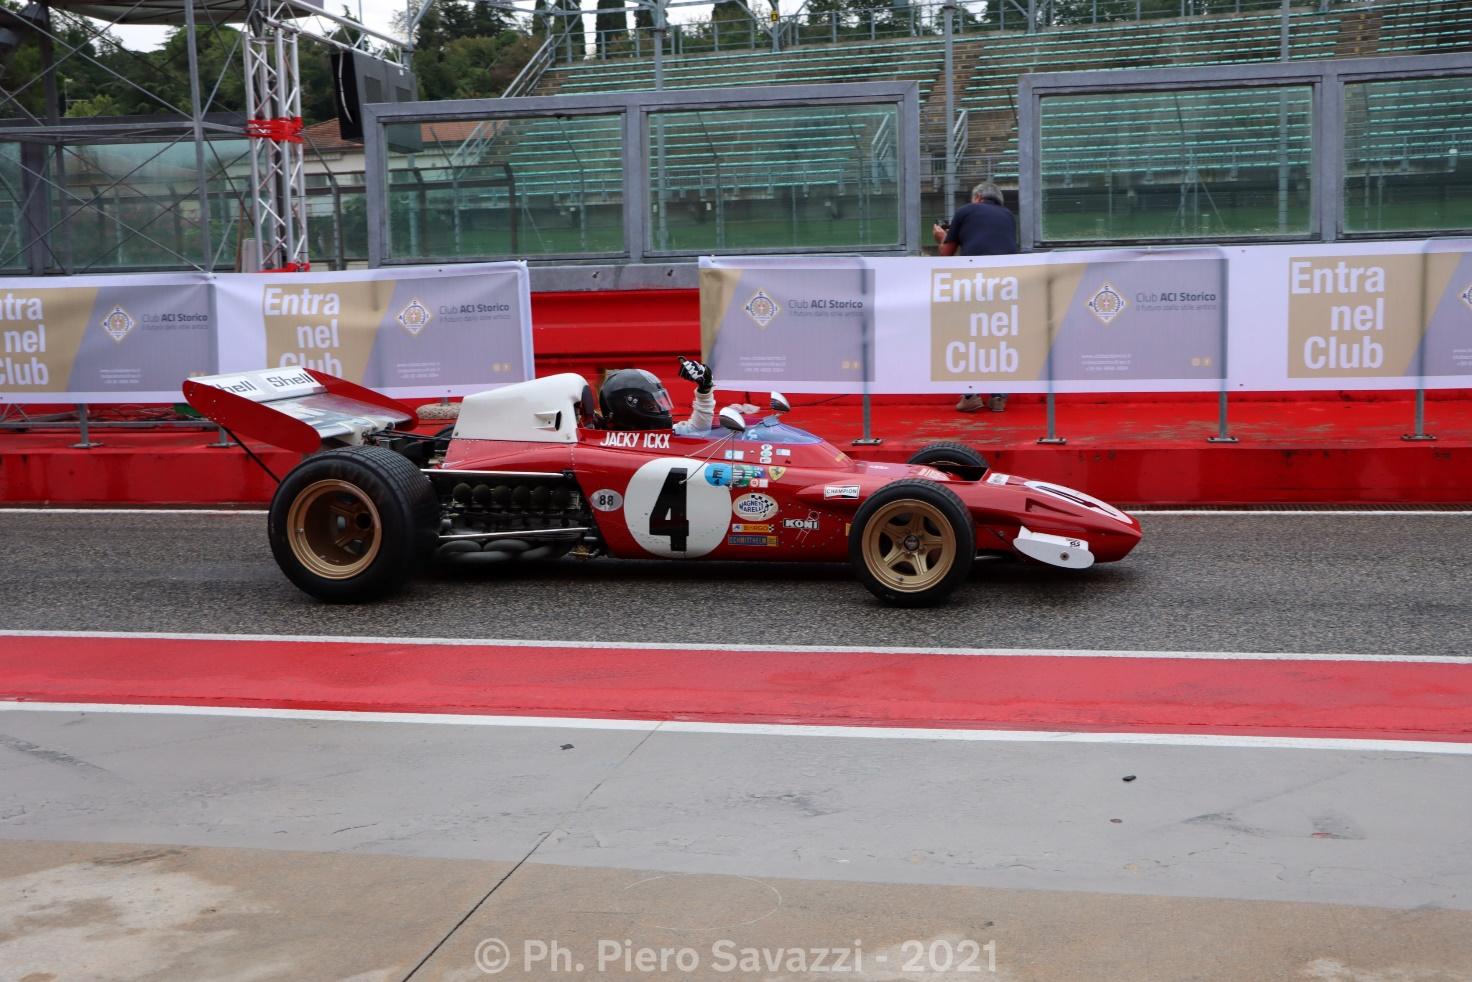 Jacky Ickx's Ferrari F1 car.